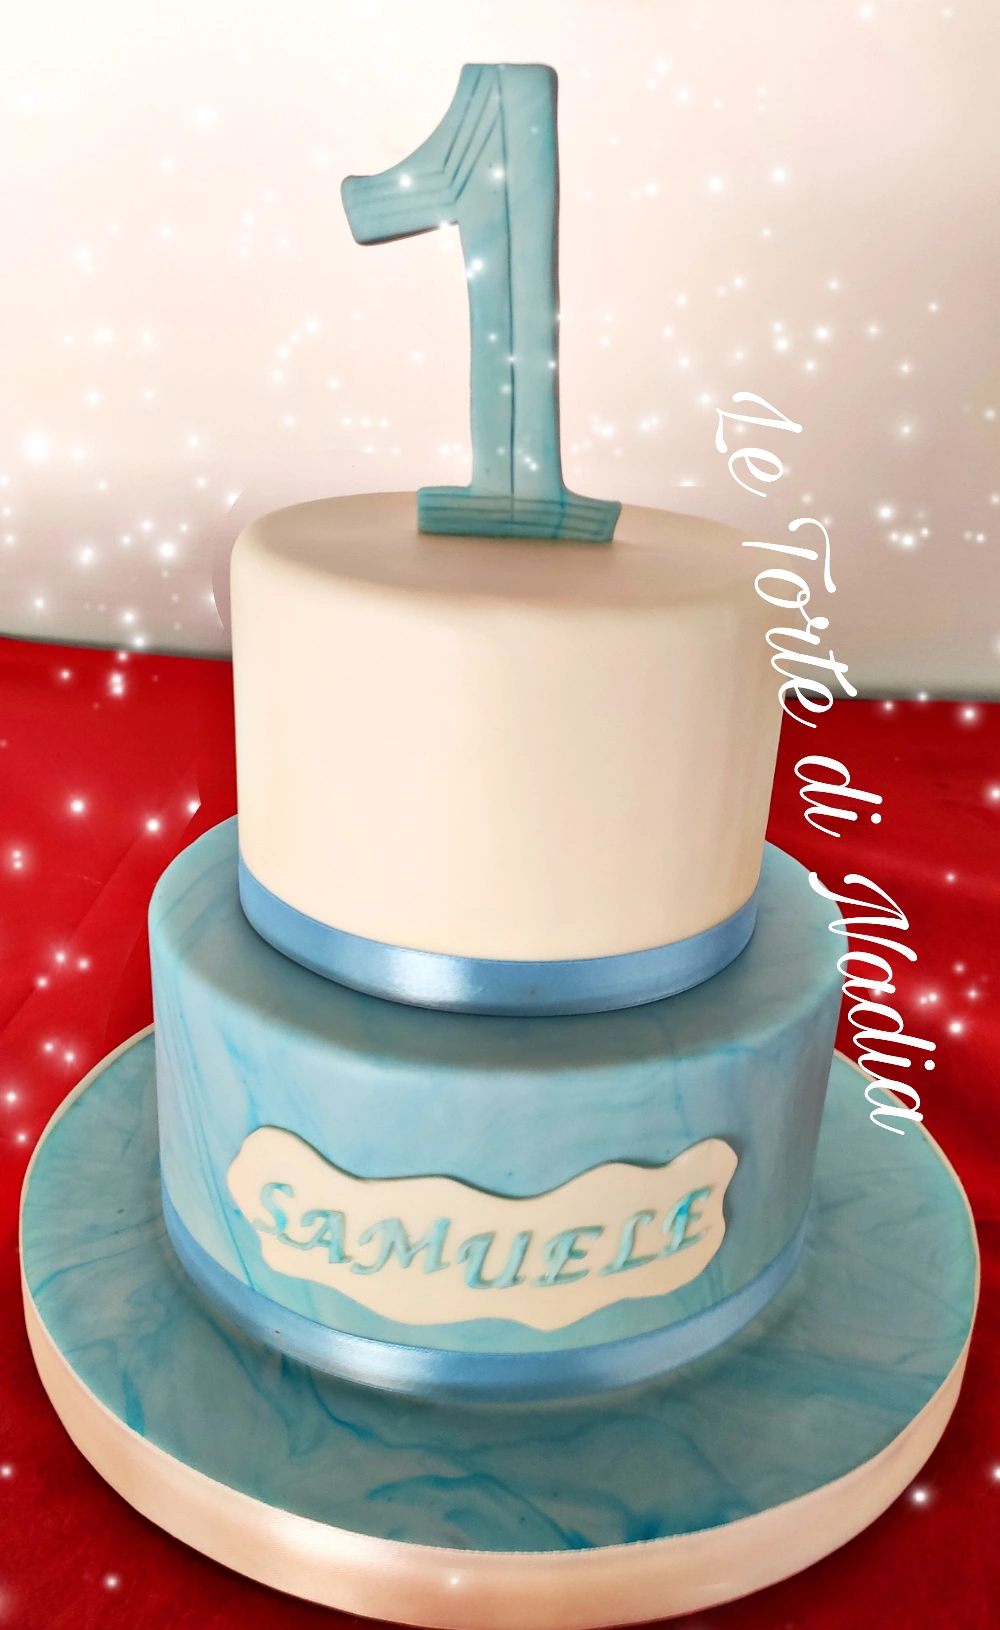 #torte #tortaprimocompleanno #cakes #torteartistiche